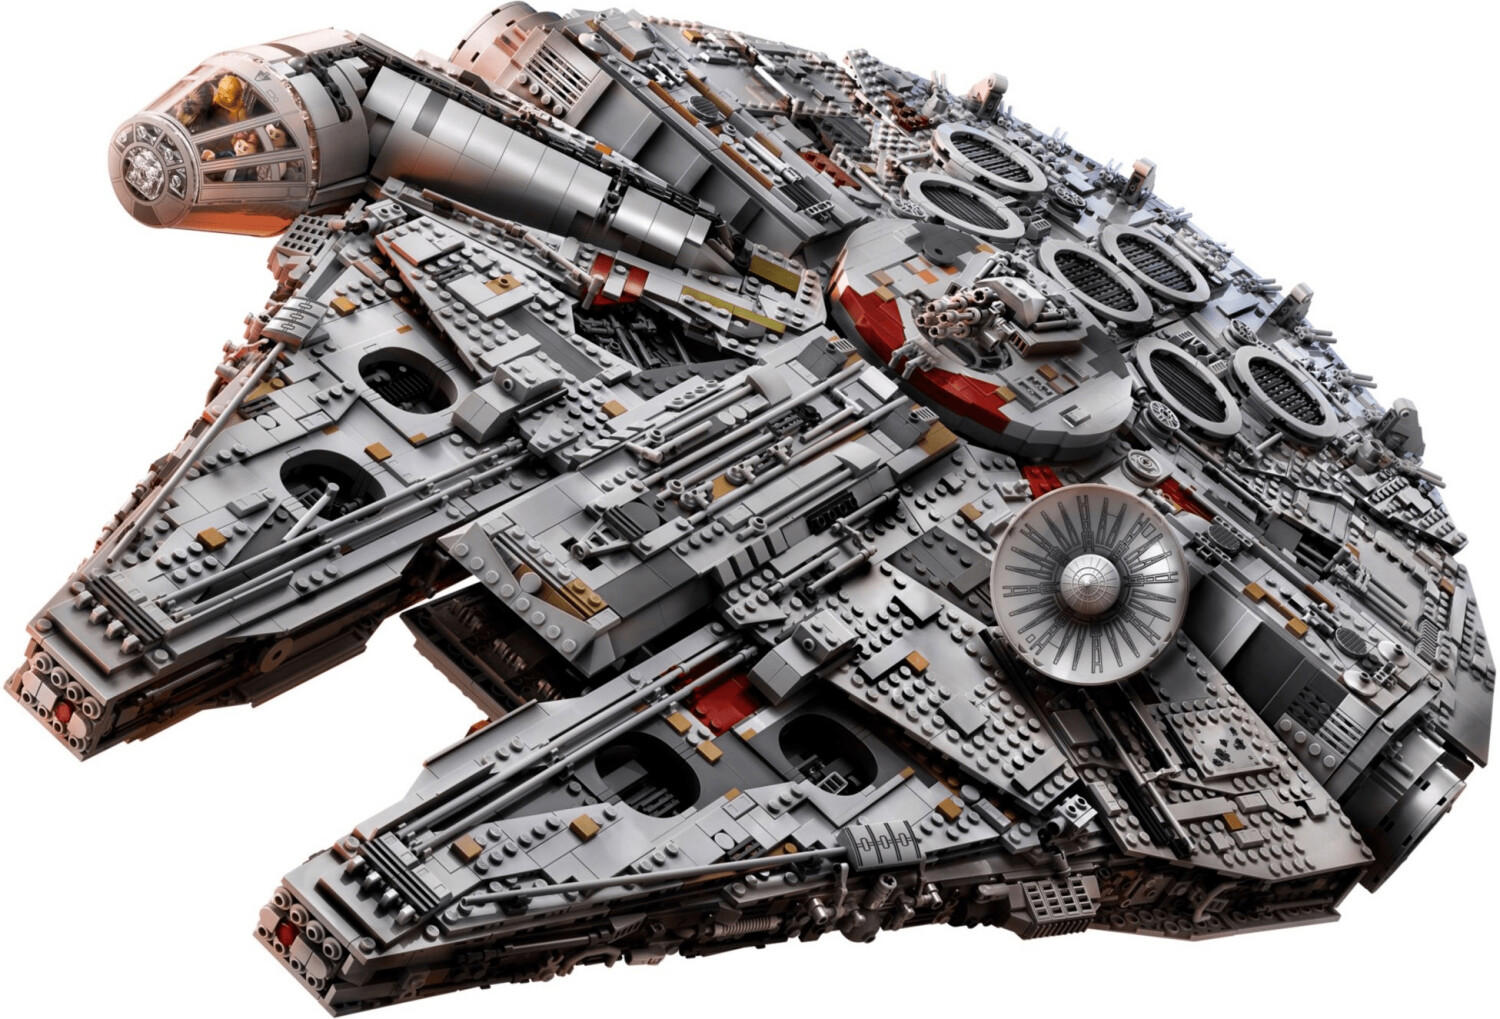 LEGO Star Wars - Millennium Falcon Ultimate Collector Series (75192)